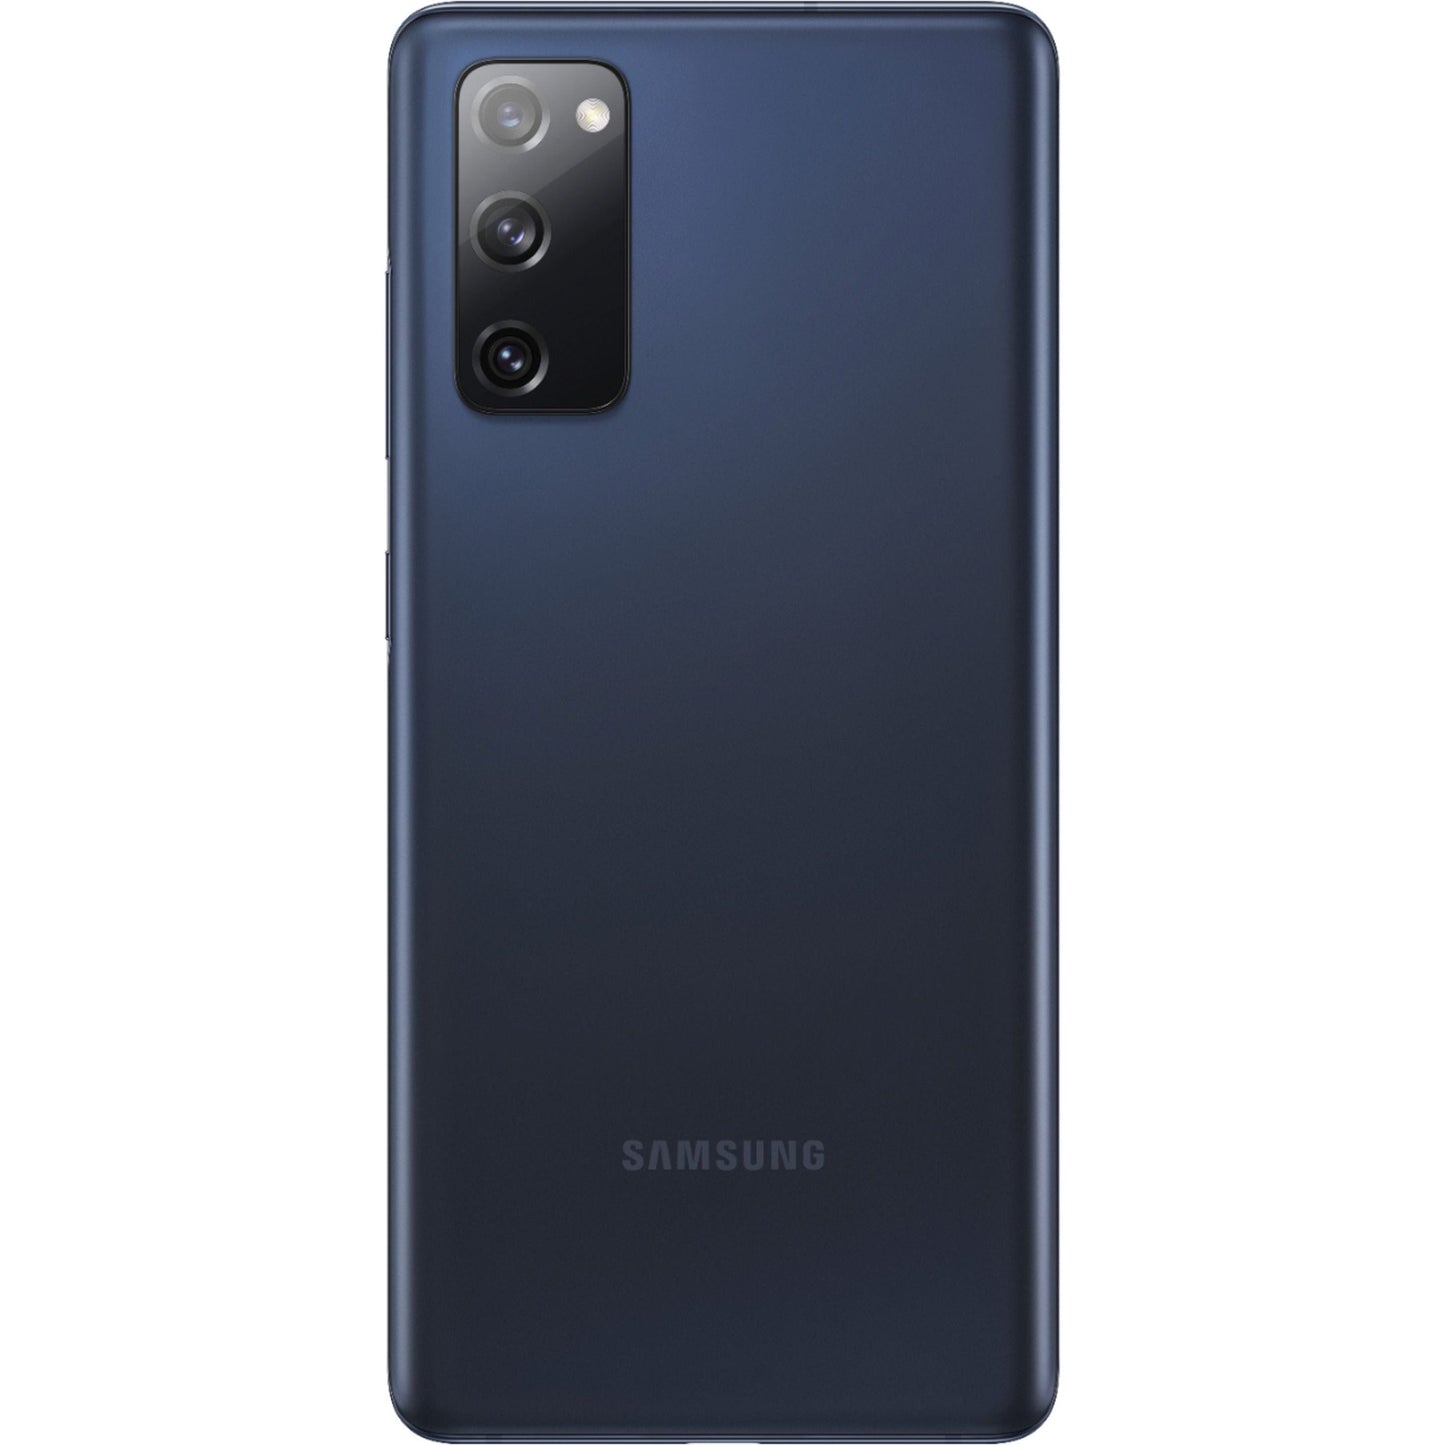 Samsung Galaxy S20 Fe 128GB Dual Sim Unlocked-GSM Android